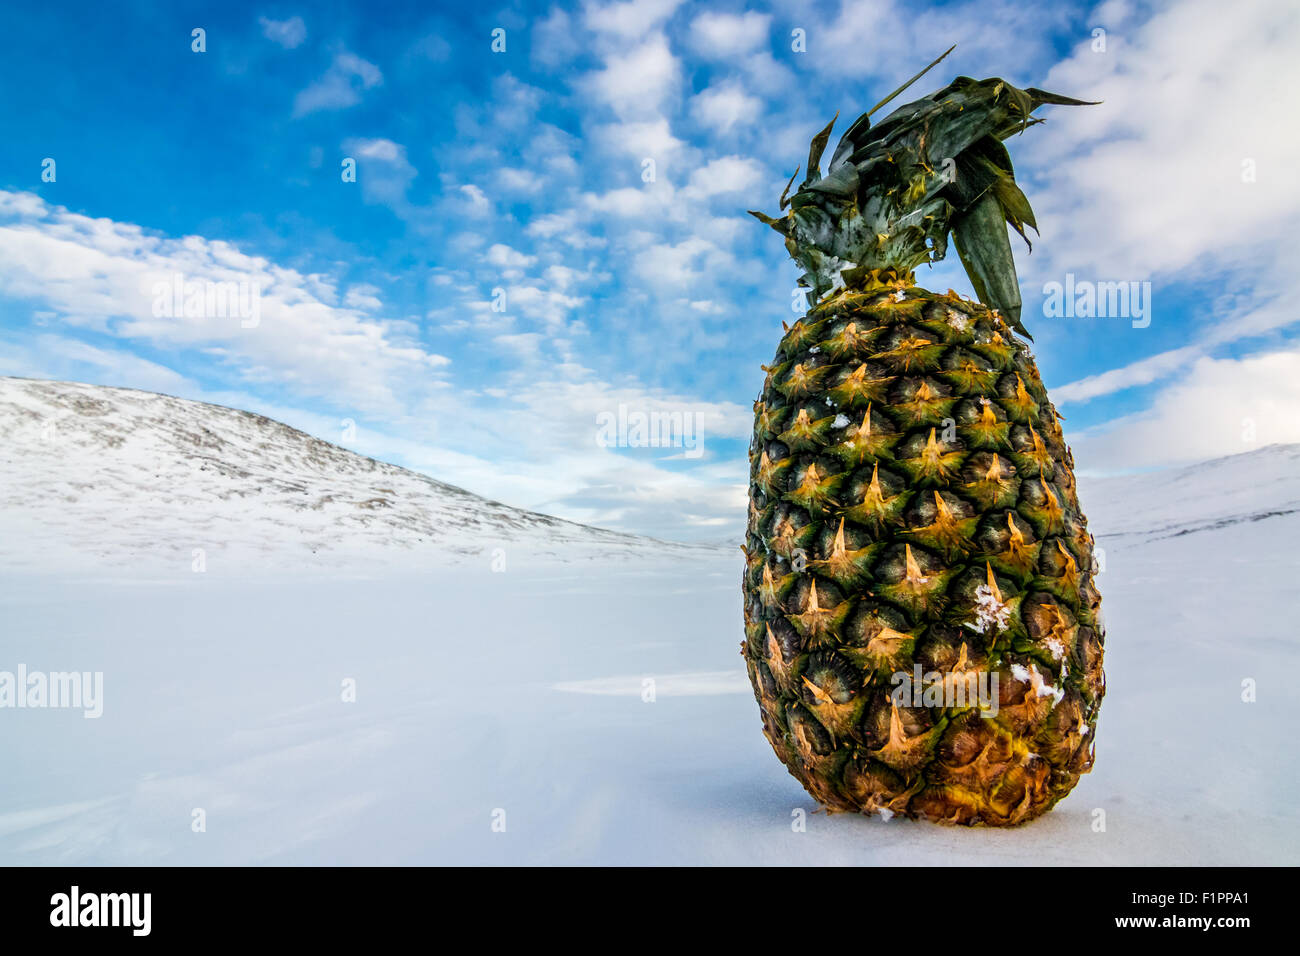 Ananas in die arktische Wildnis. Stockfoto